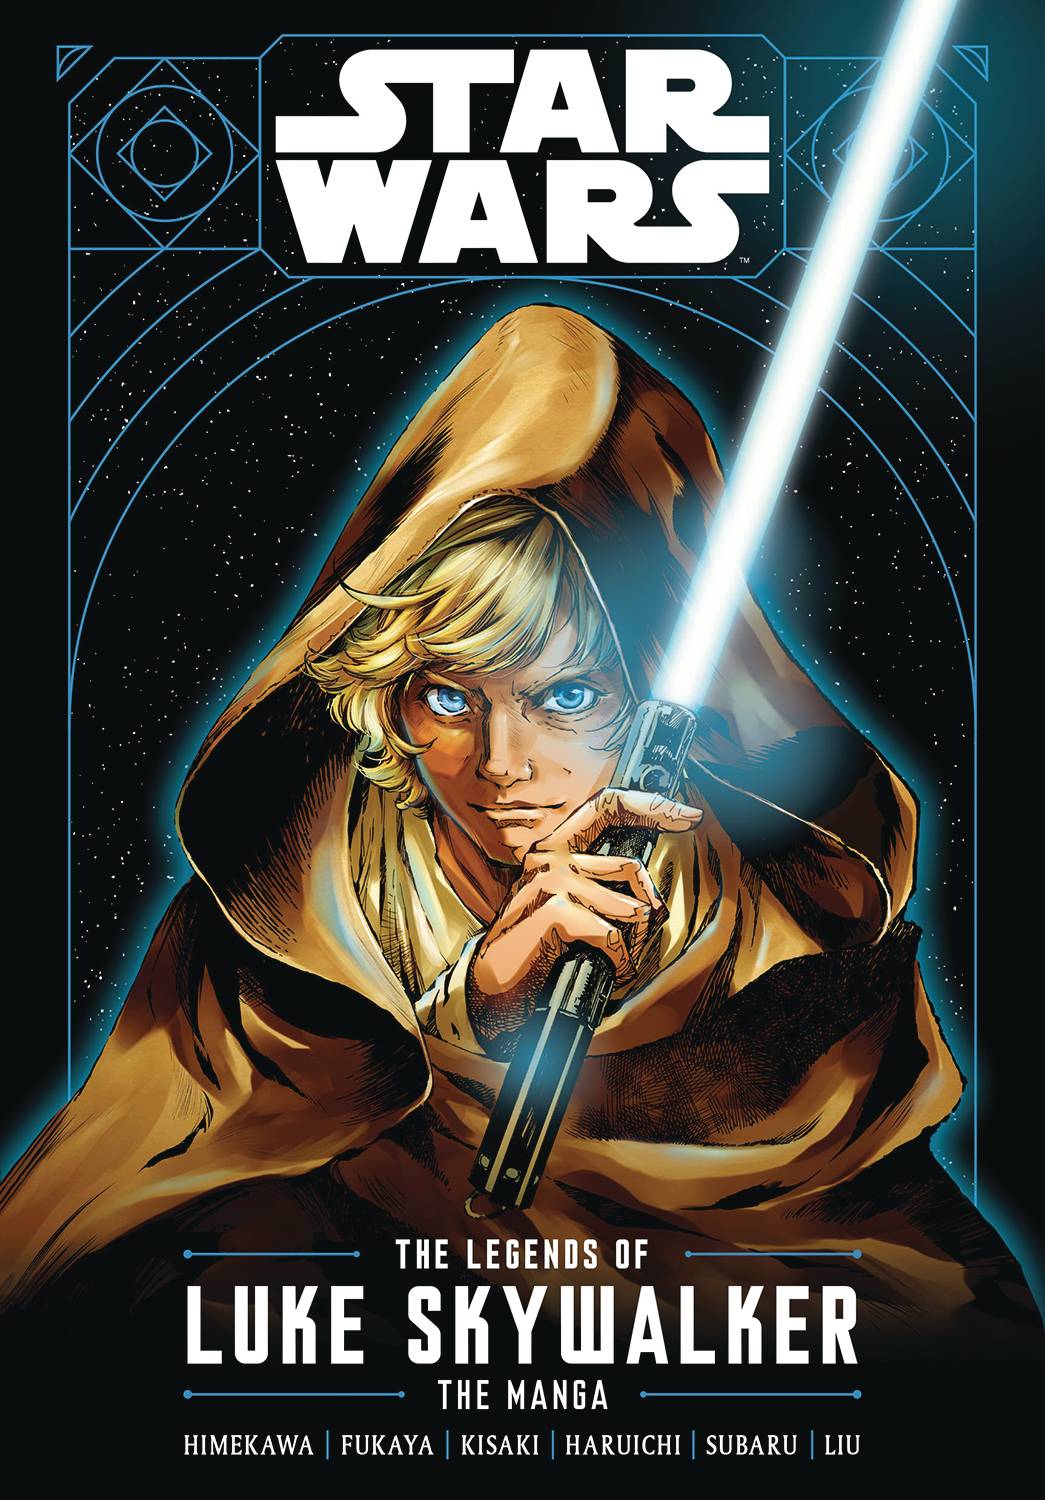 Star Wars: The Legends of Luke Skywalker - The Manga